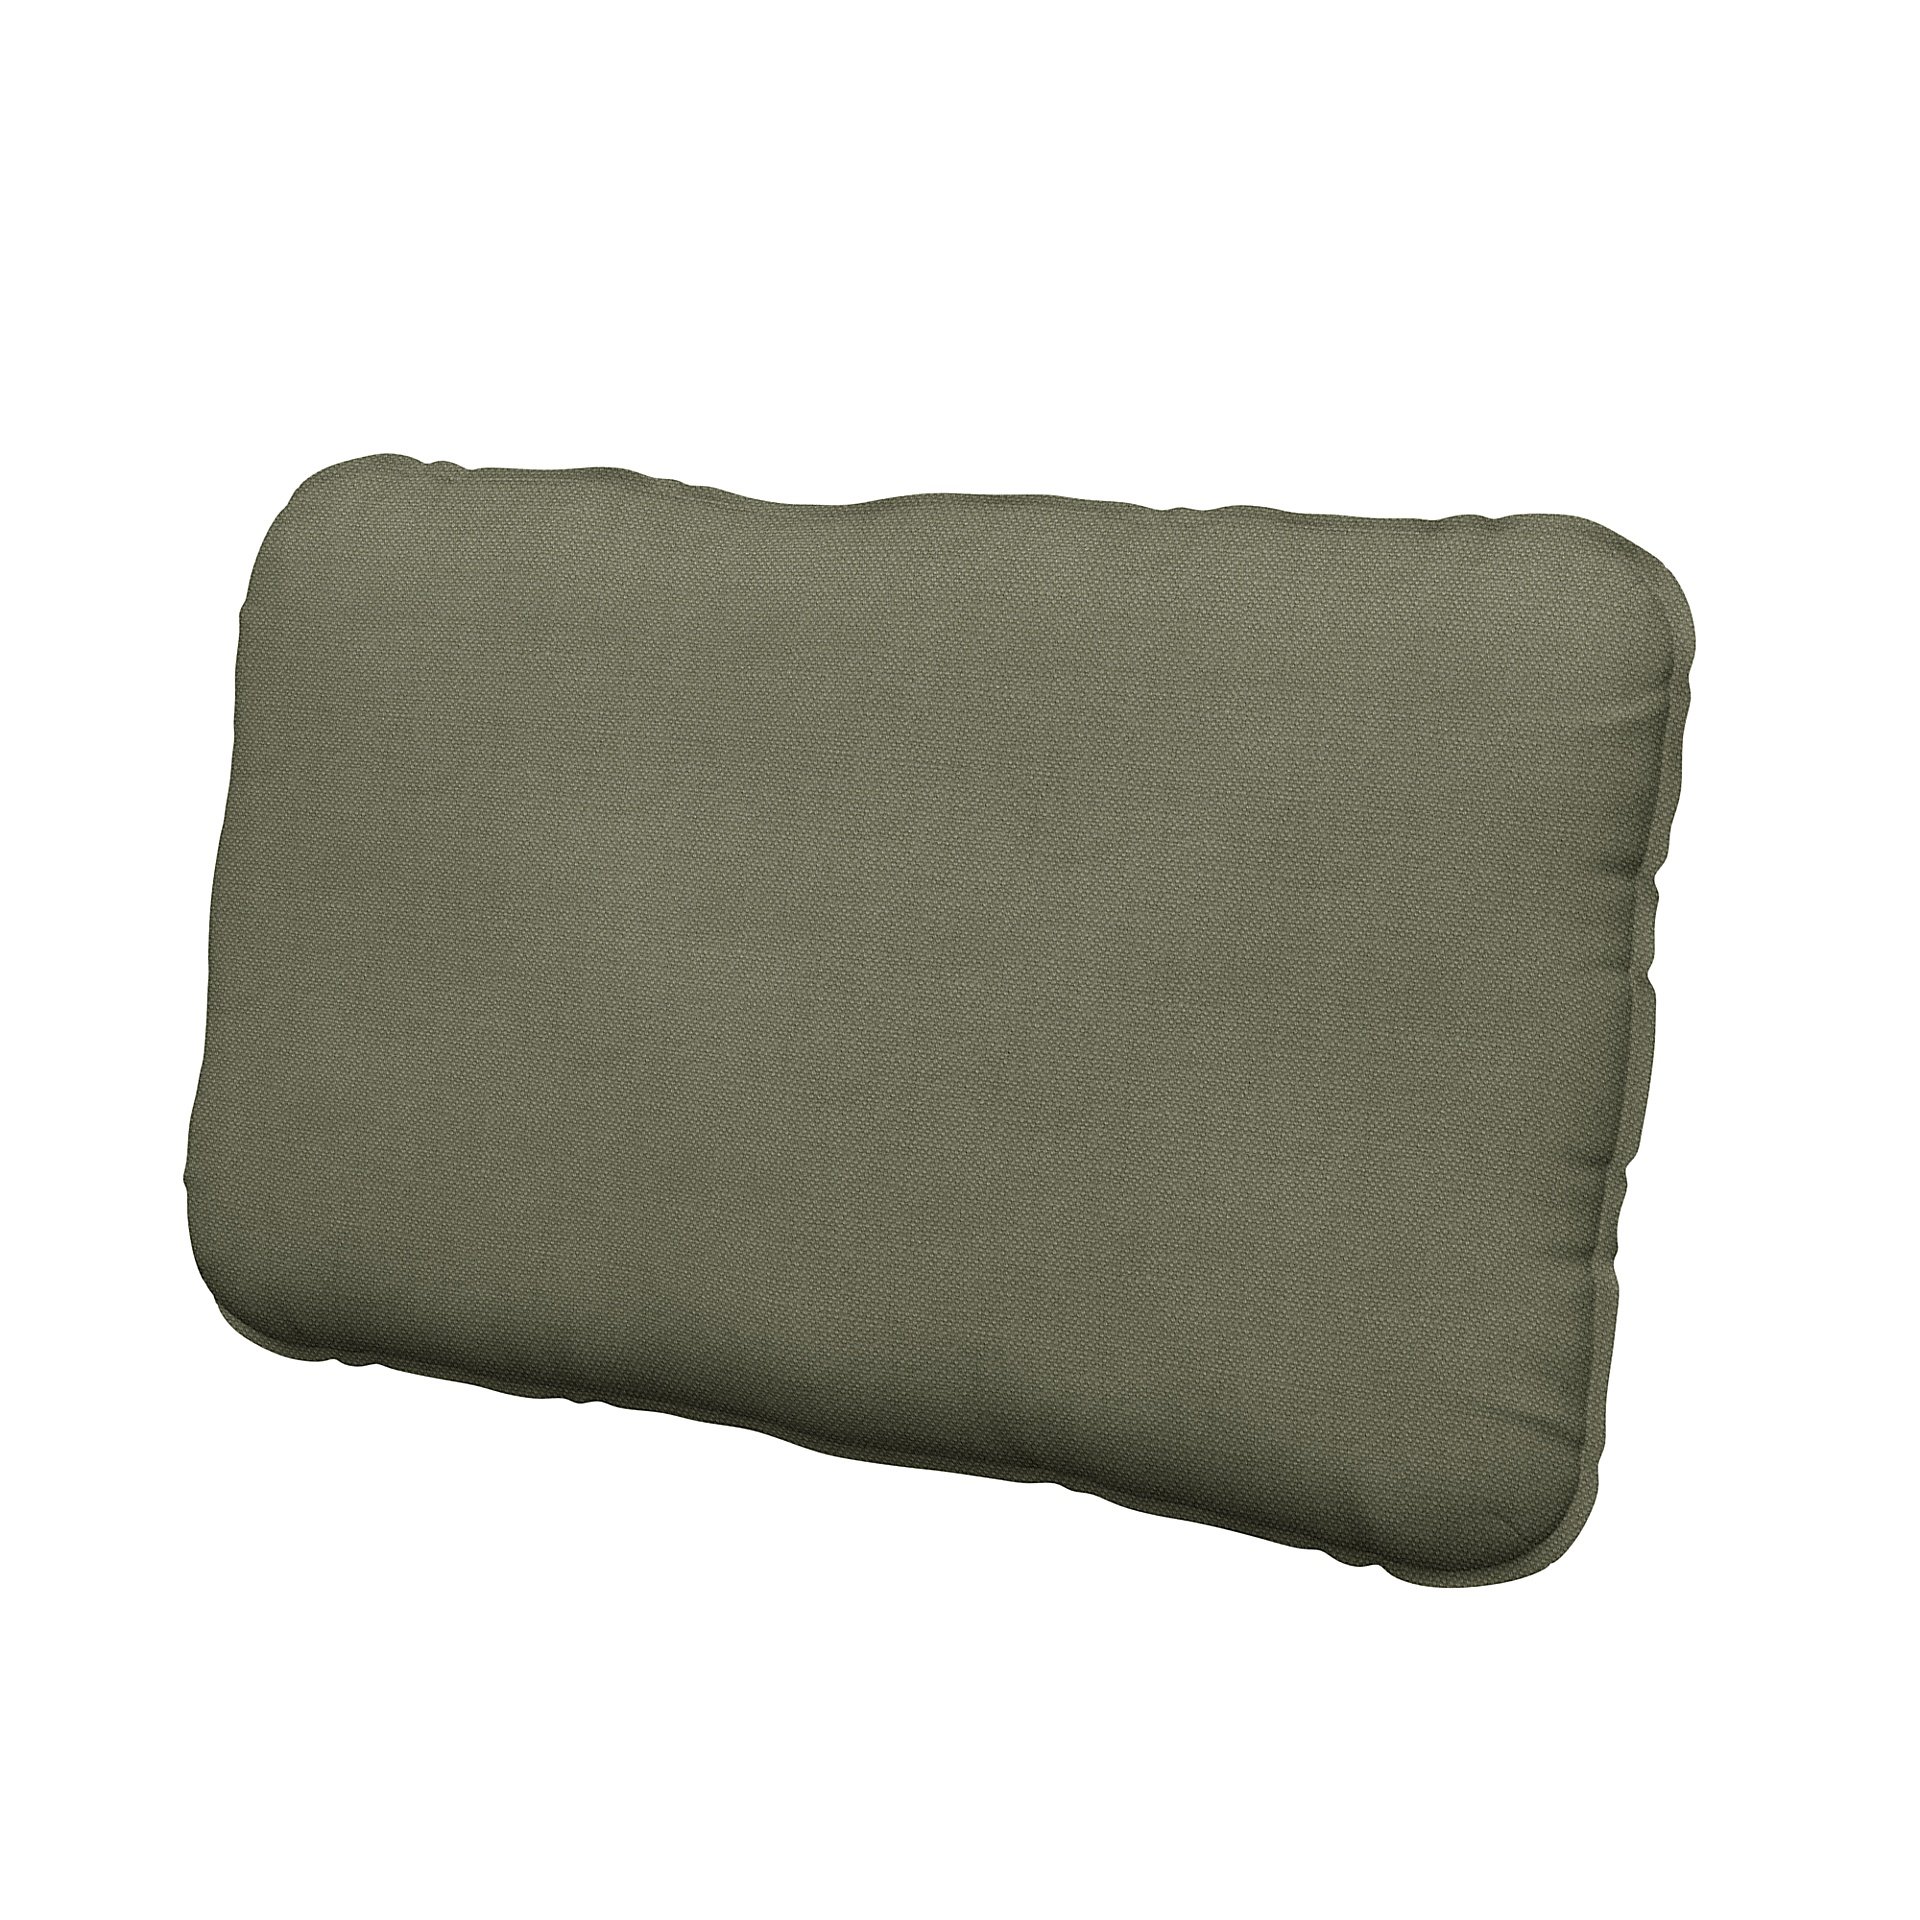 IKEA - Vallentuna back cushion cover 40x75cm, Sage, Linen - Bemz